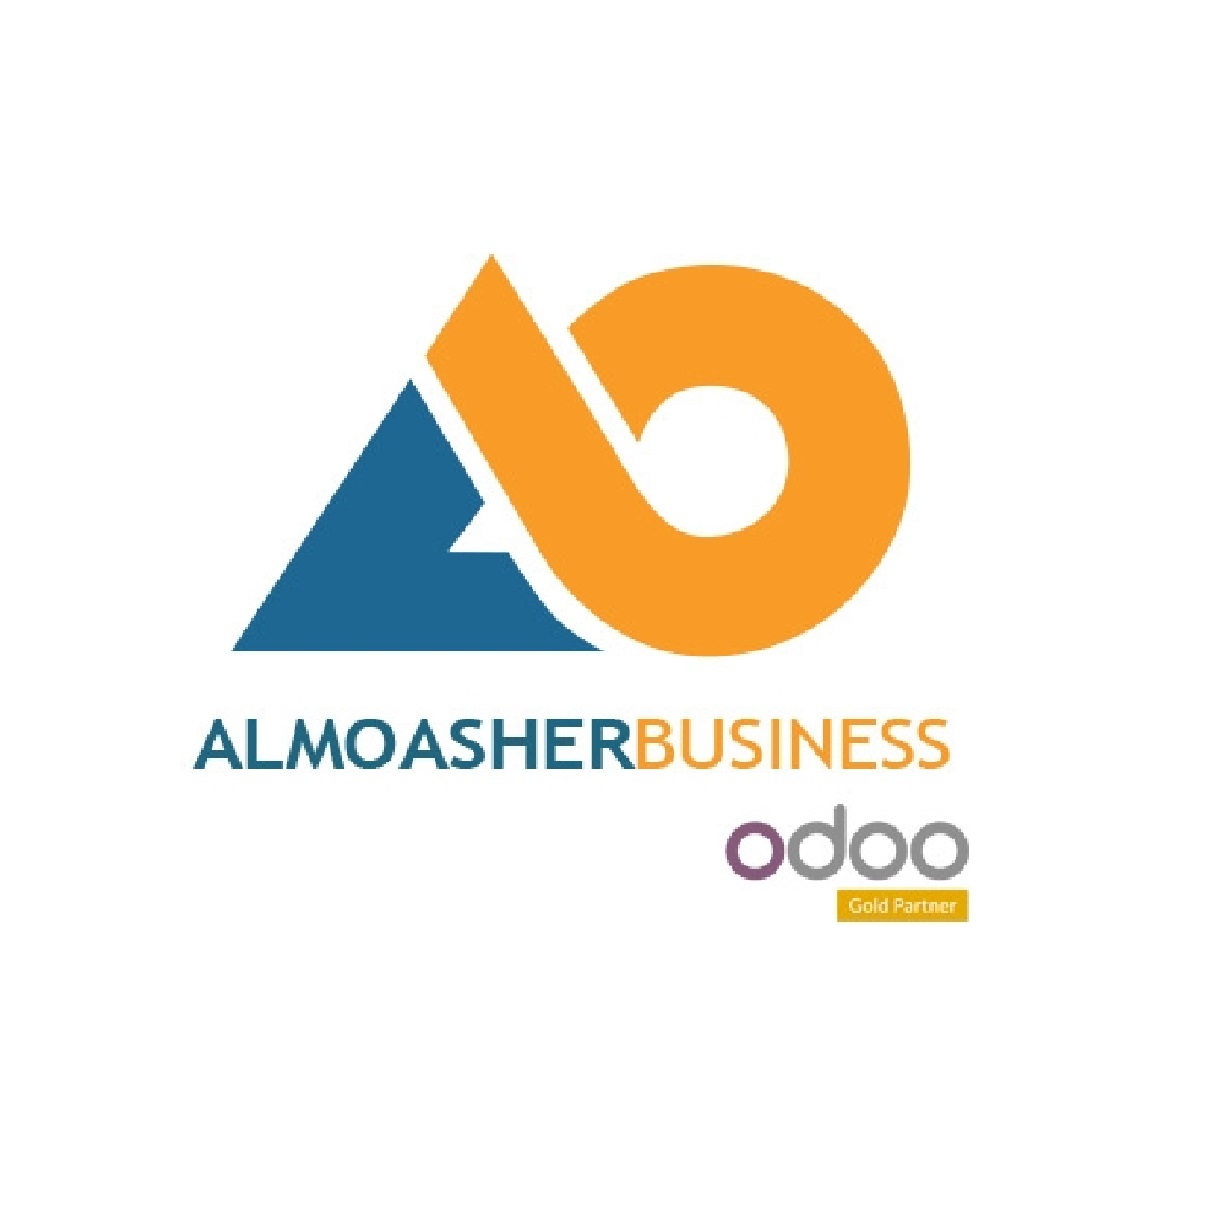 Al-moasher Business